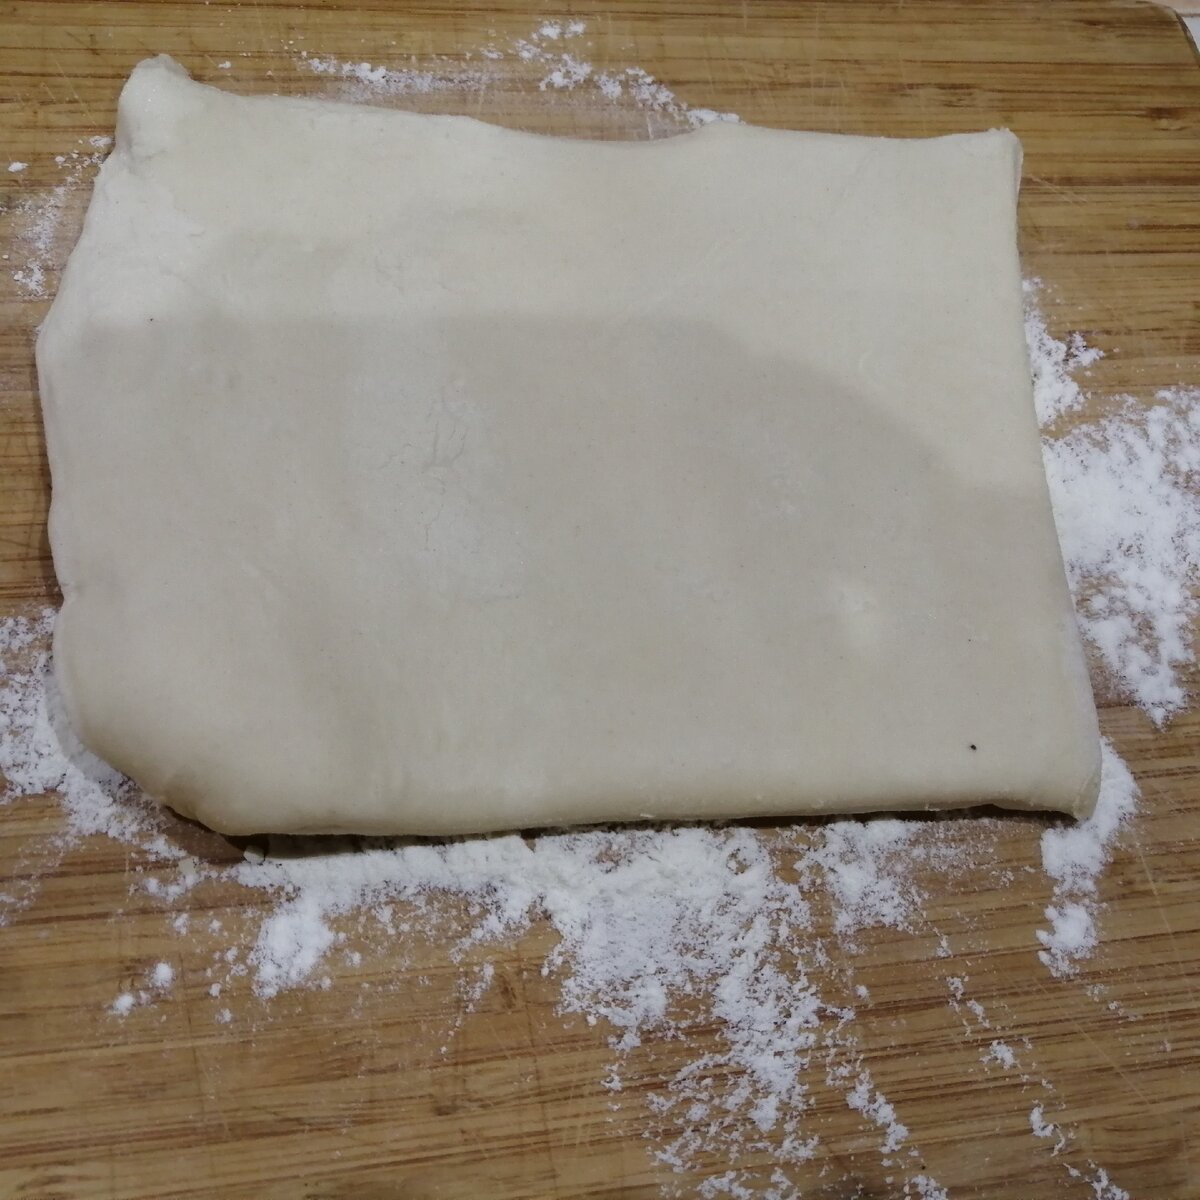 Разморозка теста слоеного. Тесто замороженное дрожжевое. Тесто из морозилки. Дрожжевое тесто разморозка. Разморозить тесто.